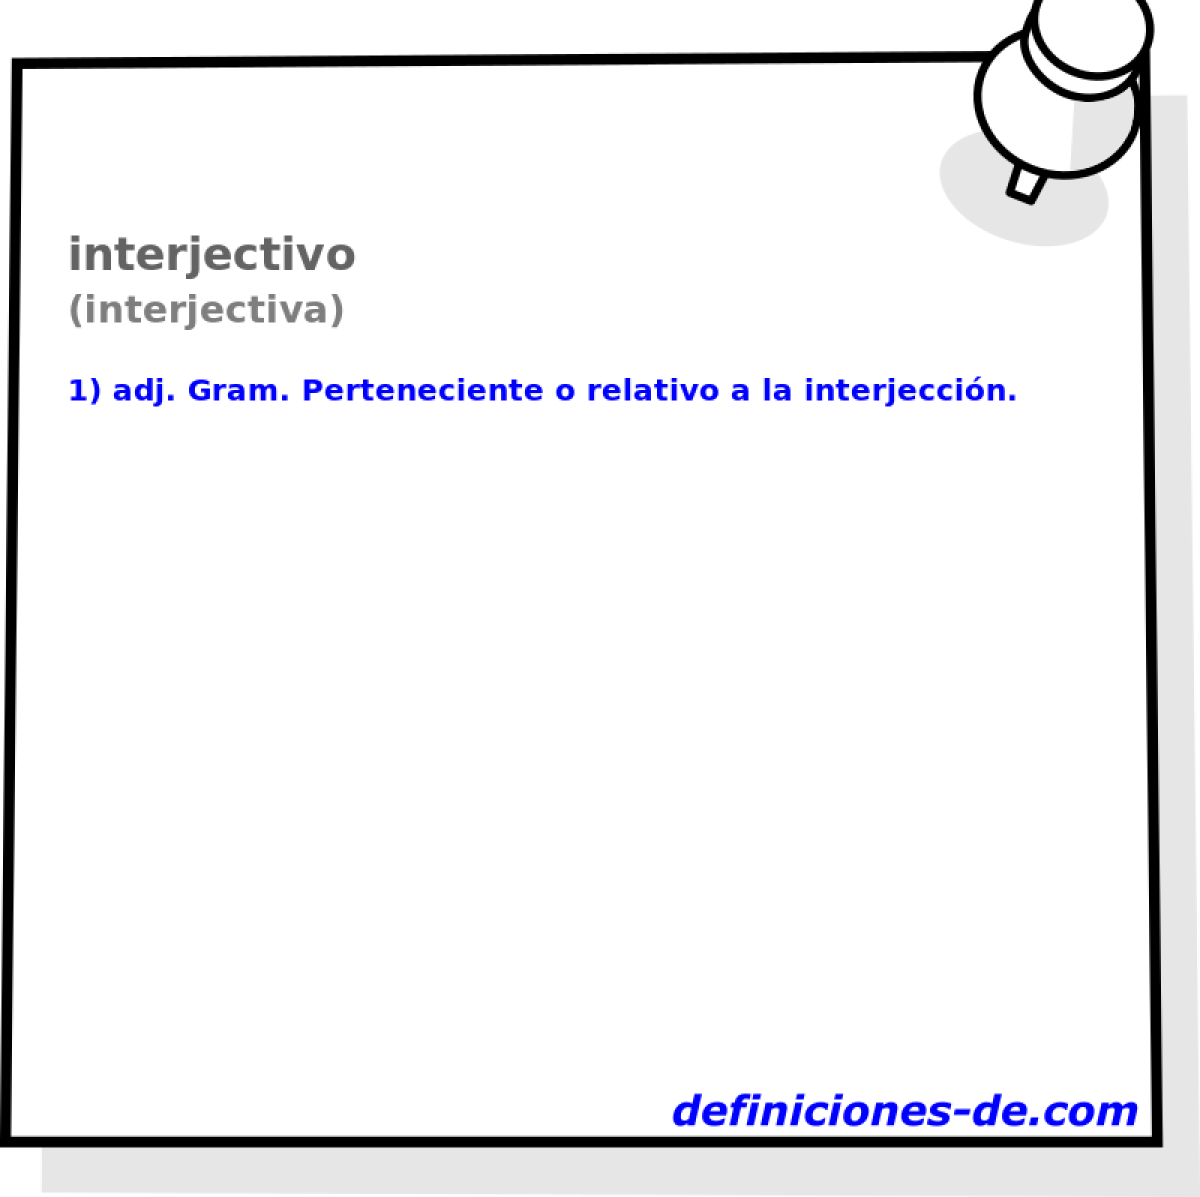 interjectivo (interjectiva)